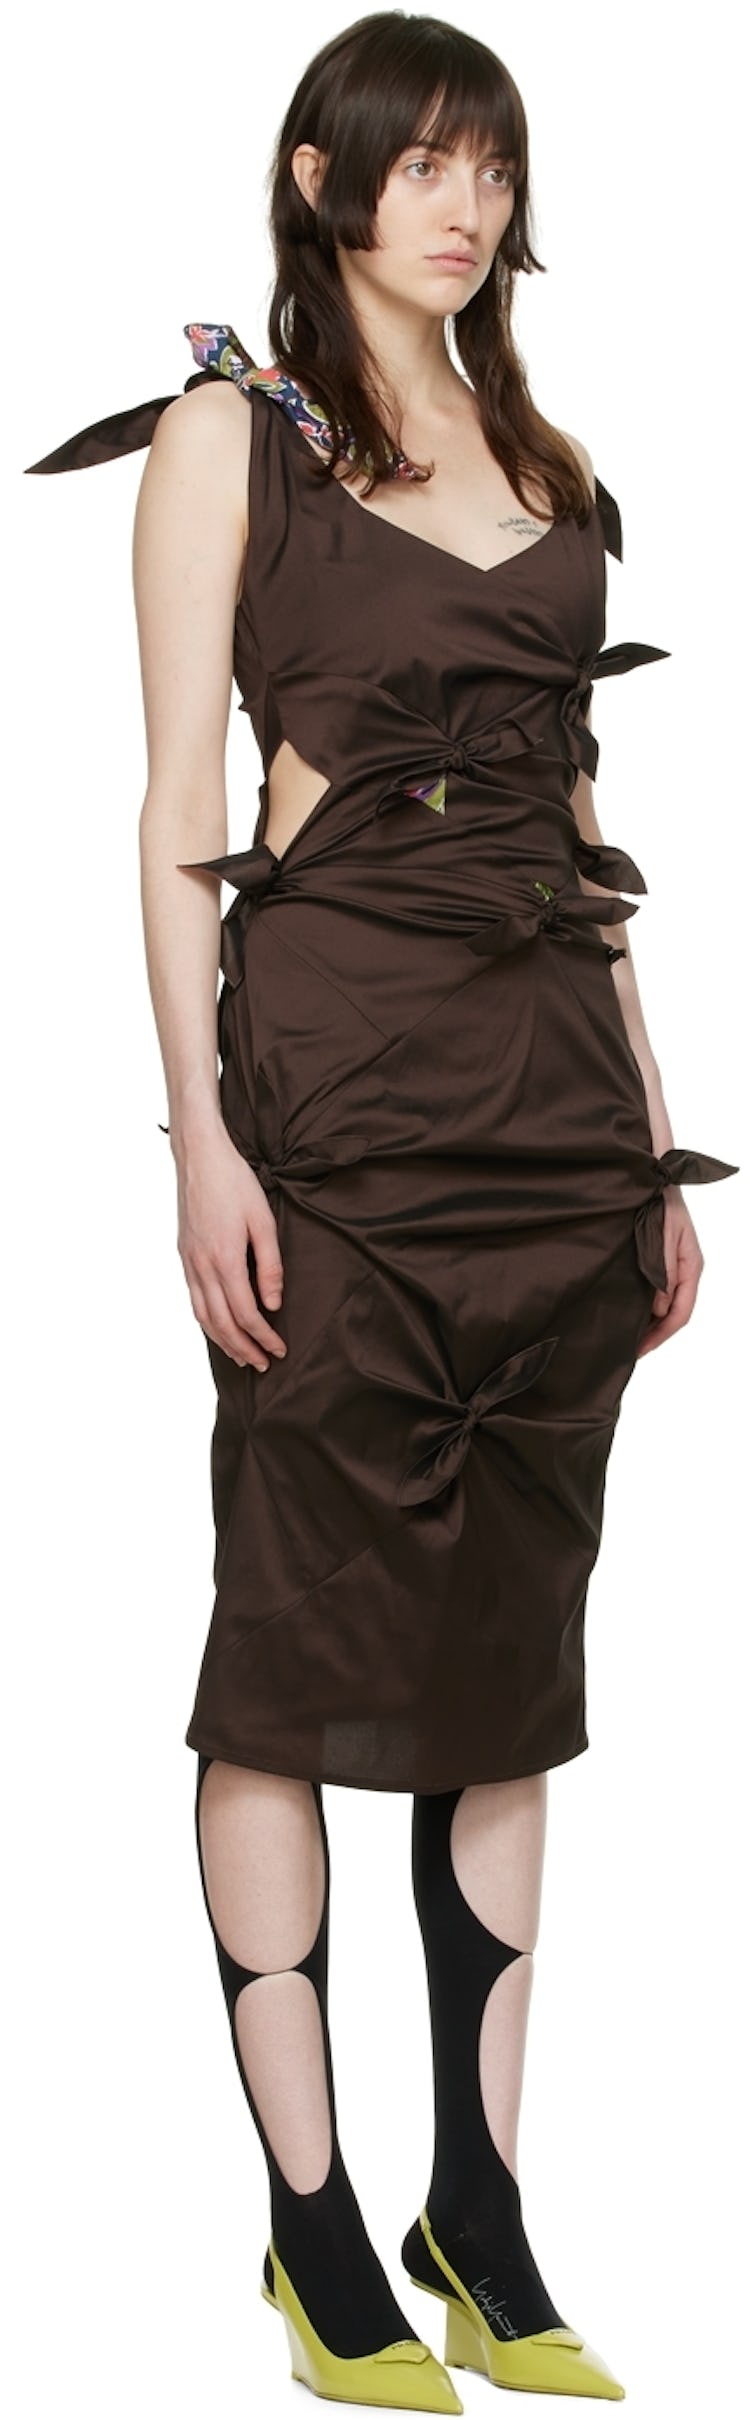 Brown Polyester Midi Dress: additional image